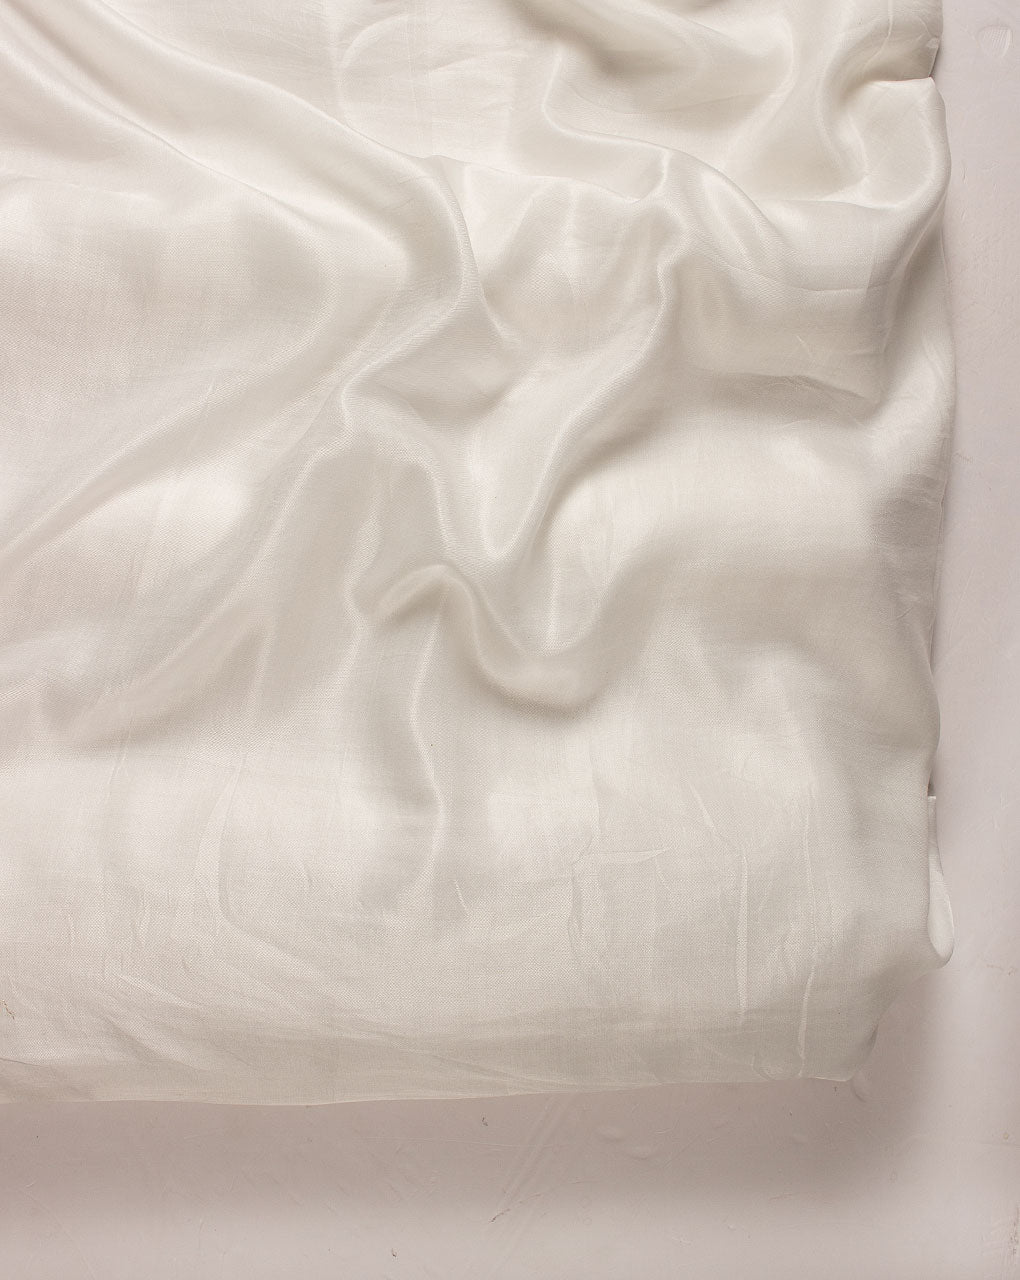 Dyeable Liva VFY Modal ( Gaji Japan Silk ) Fabric - Fabriclore.com